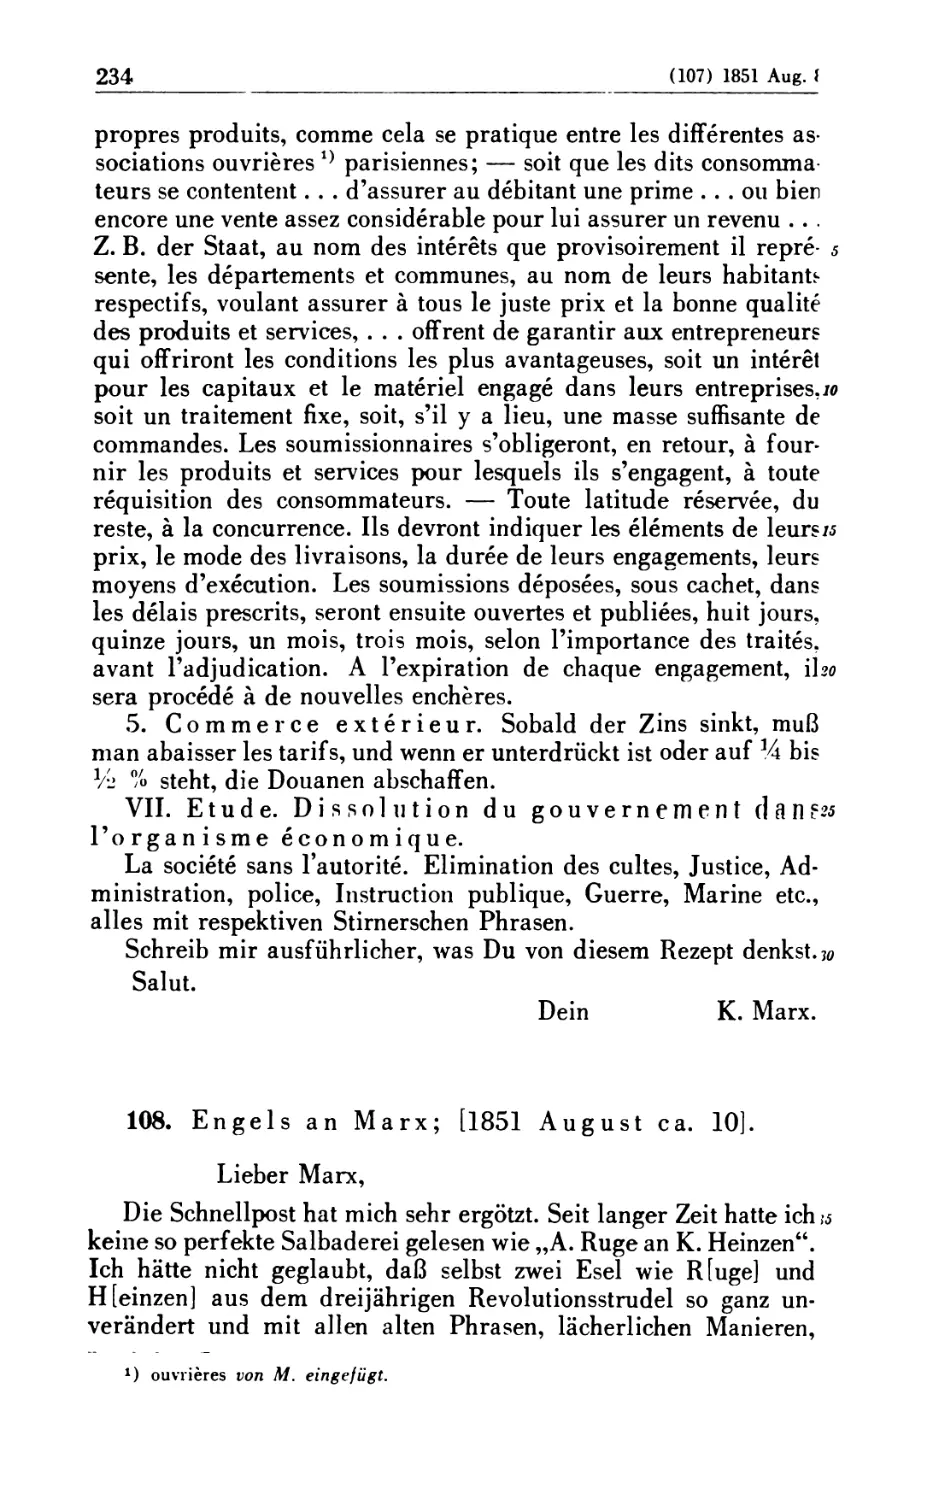 108. Engels an Marx; [1851 August ca. 10]